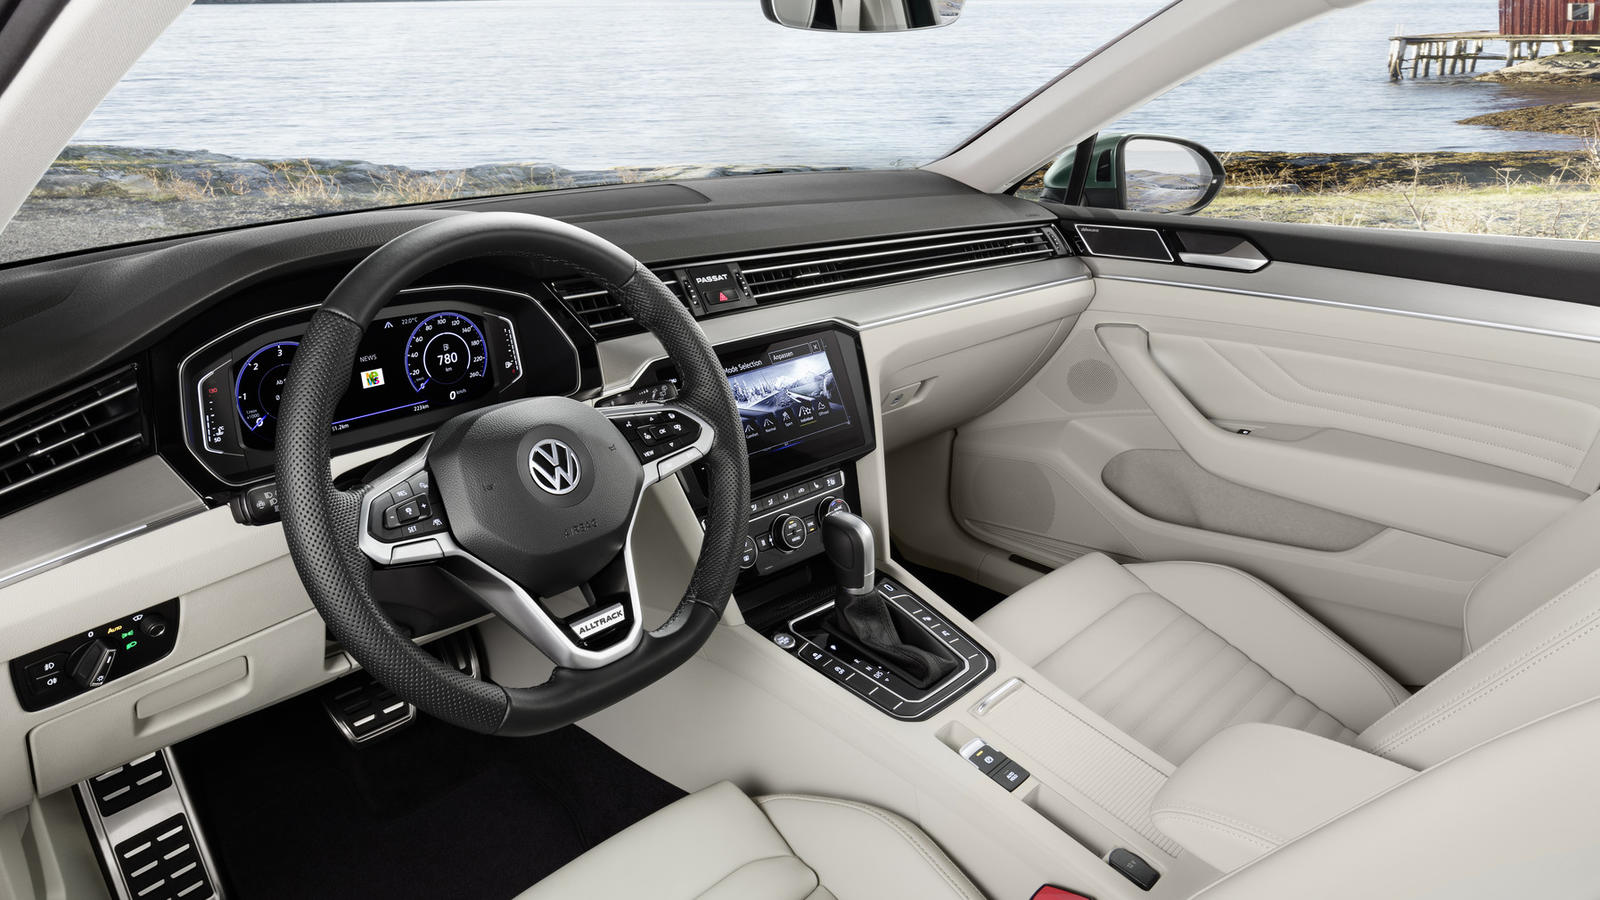 The new Volkswagen Passat Alltrack